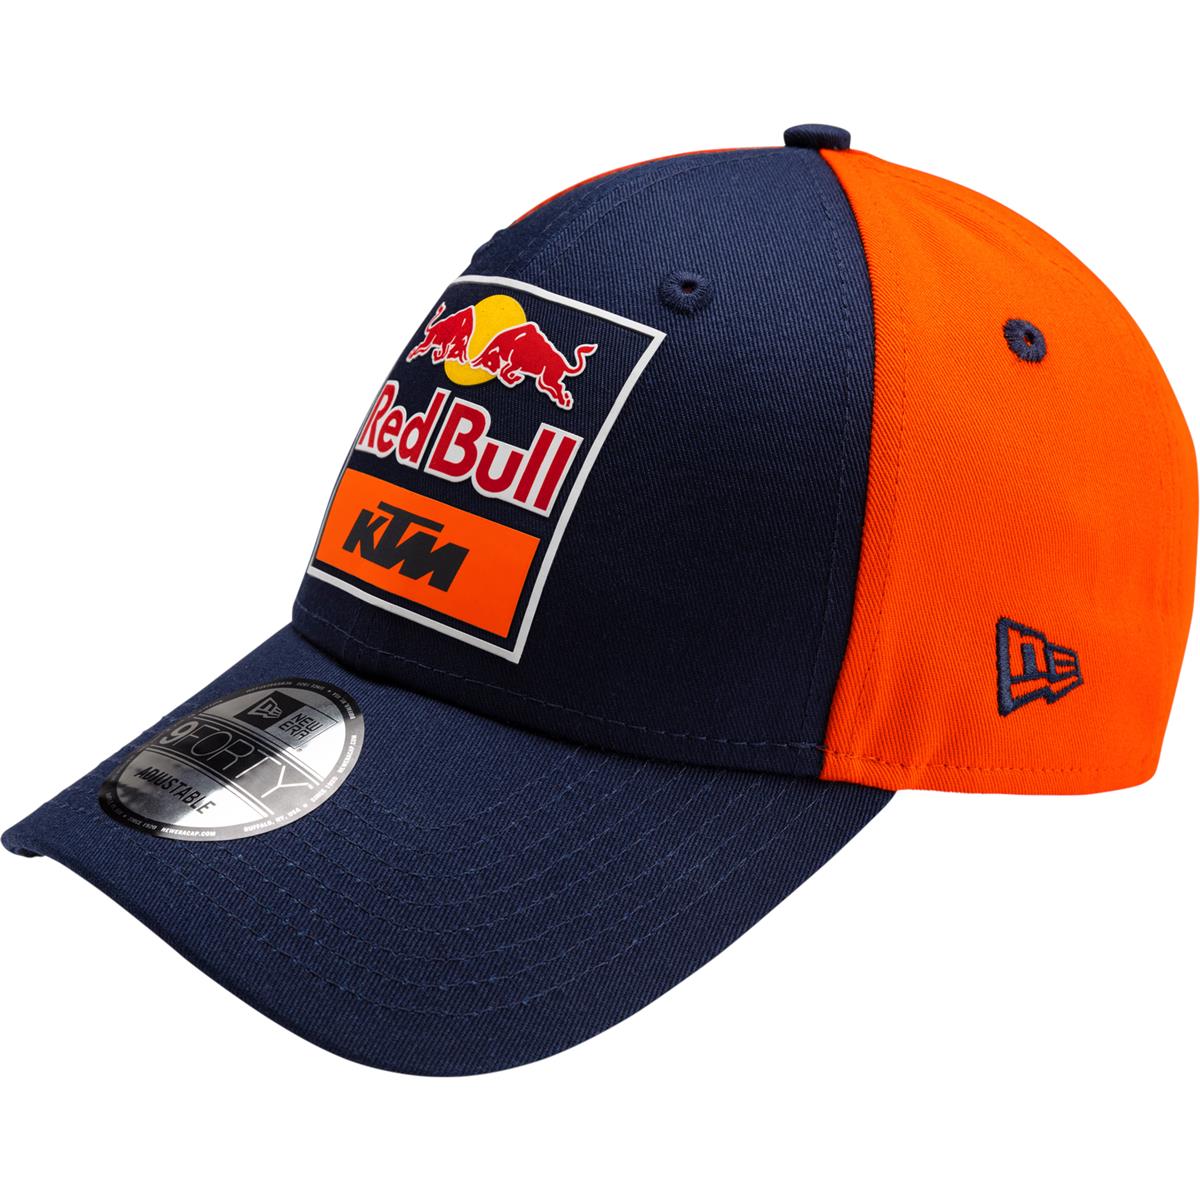 Red Bull Snapback Cap KTM Official Teamline Replica - Curved - Navy/Orange